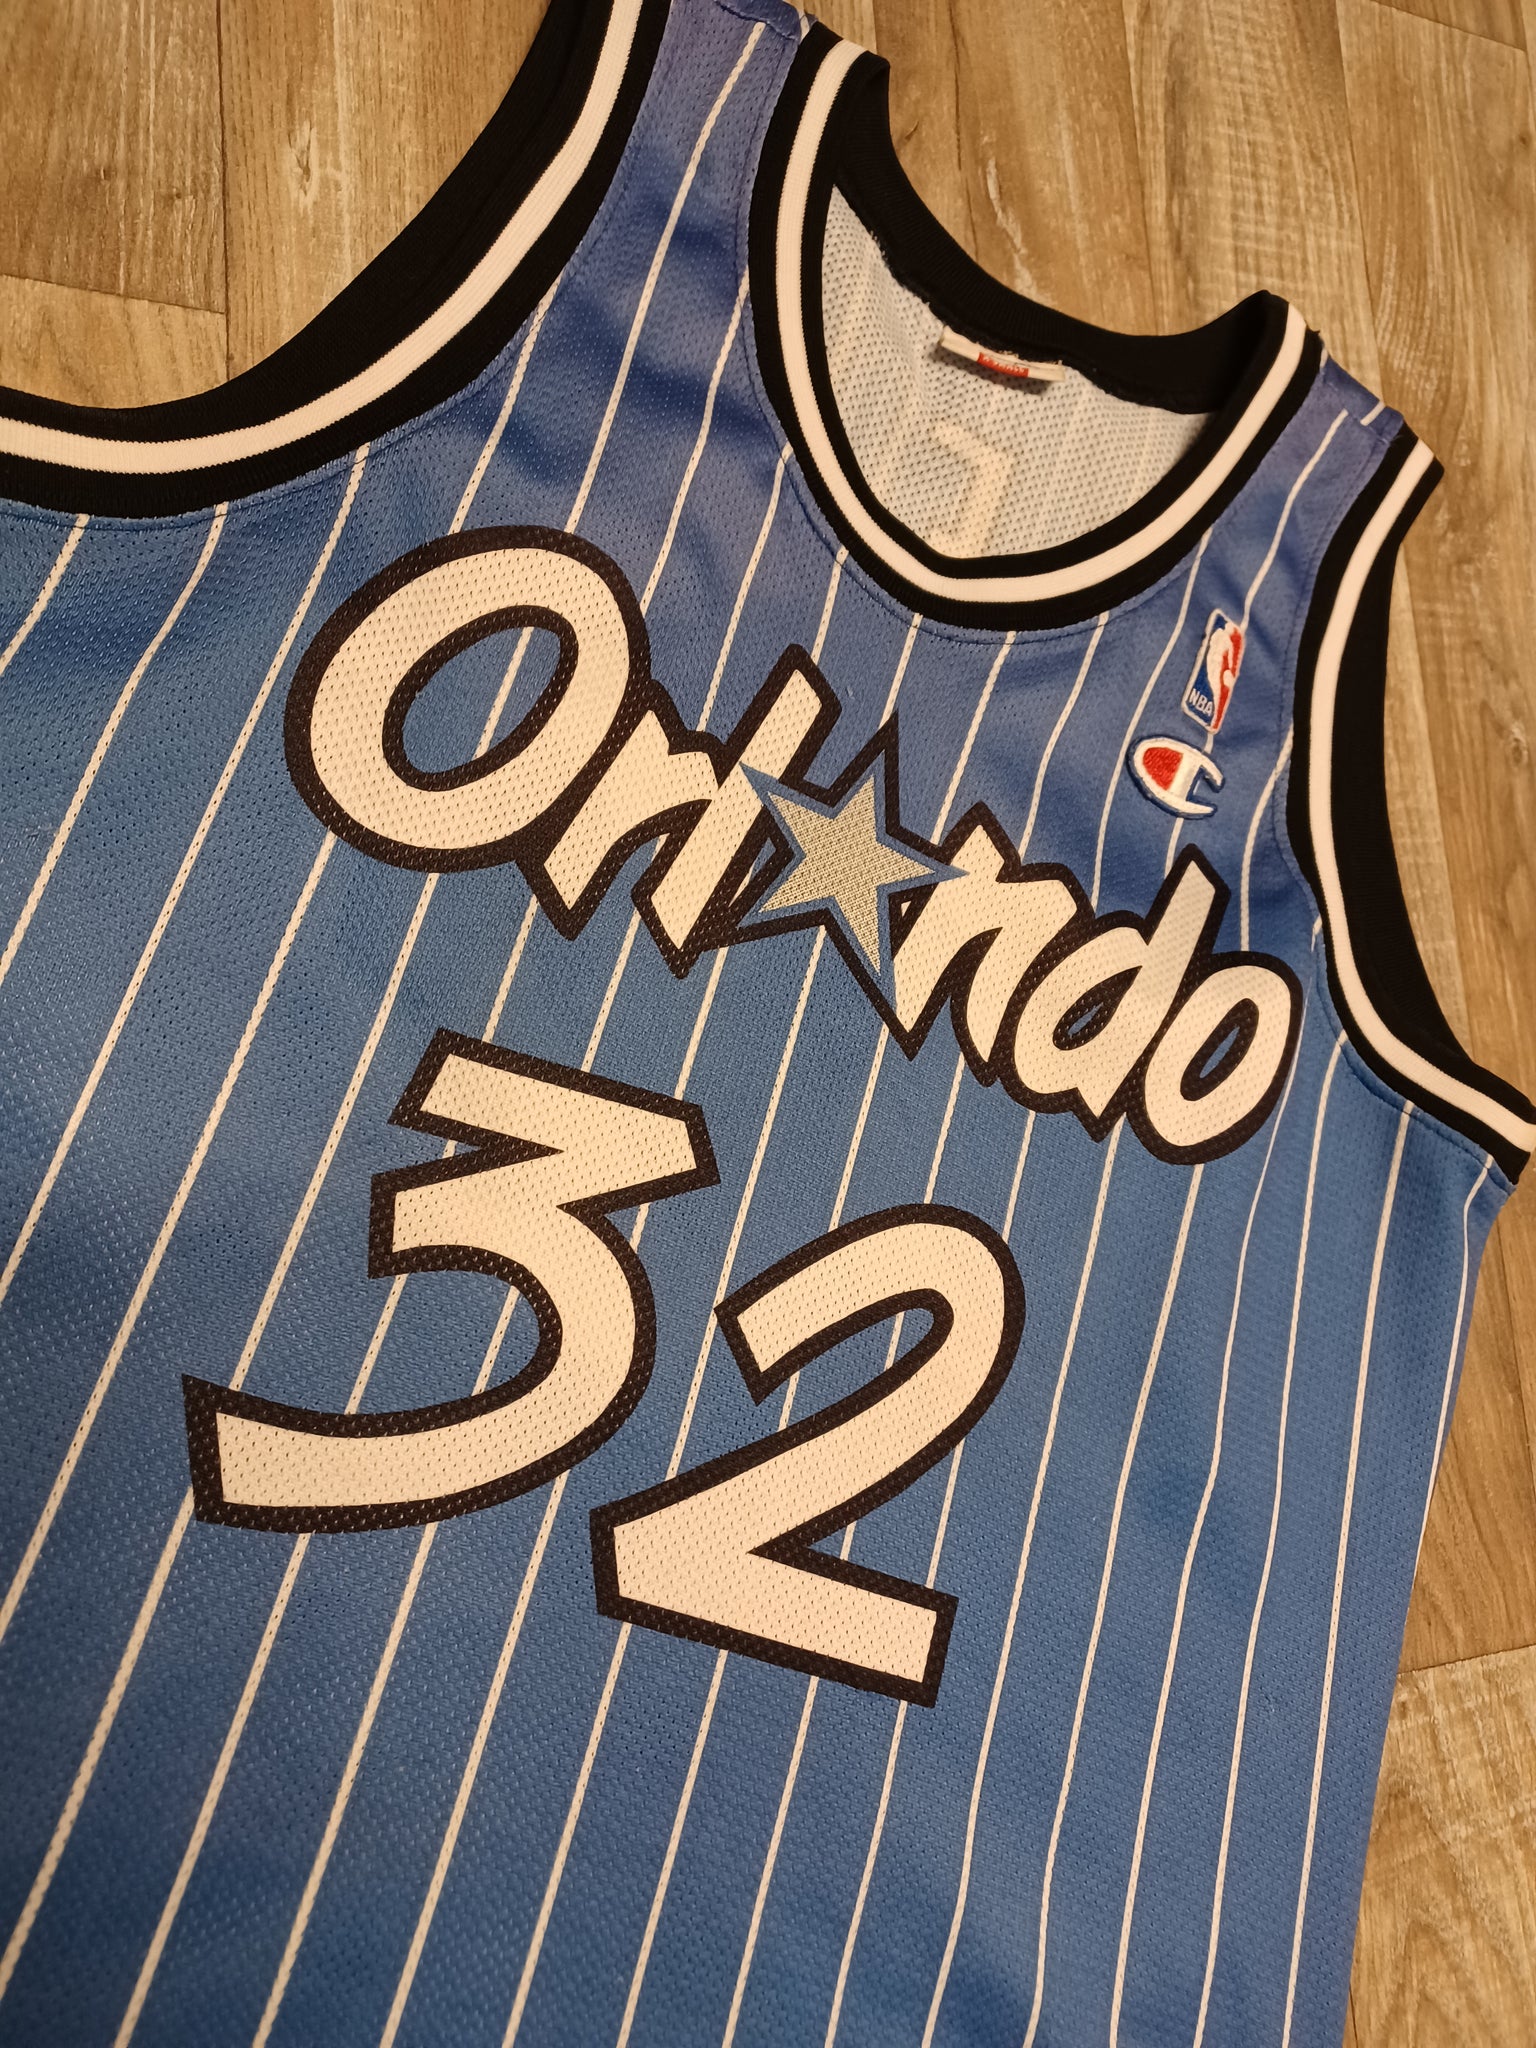 Shaquille O'Neal Orlando Magic - Size XL - NBA Basketball Jersey